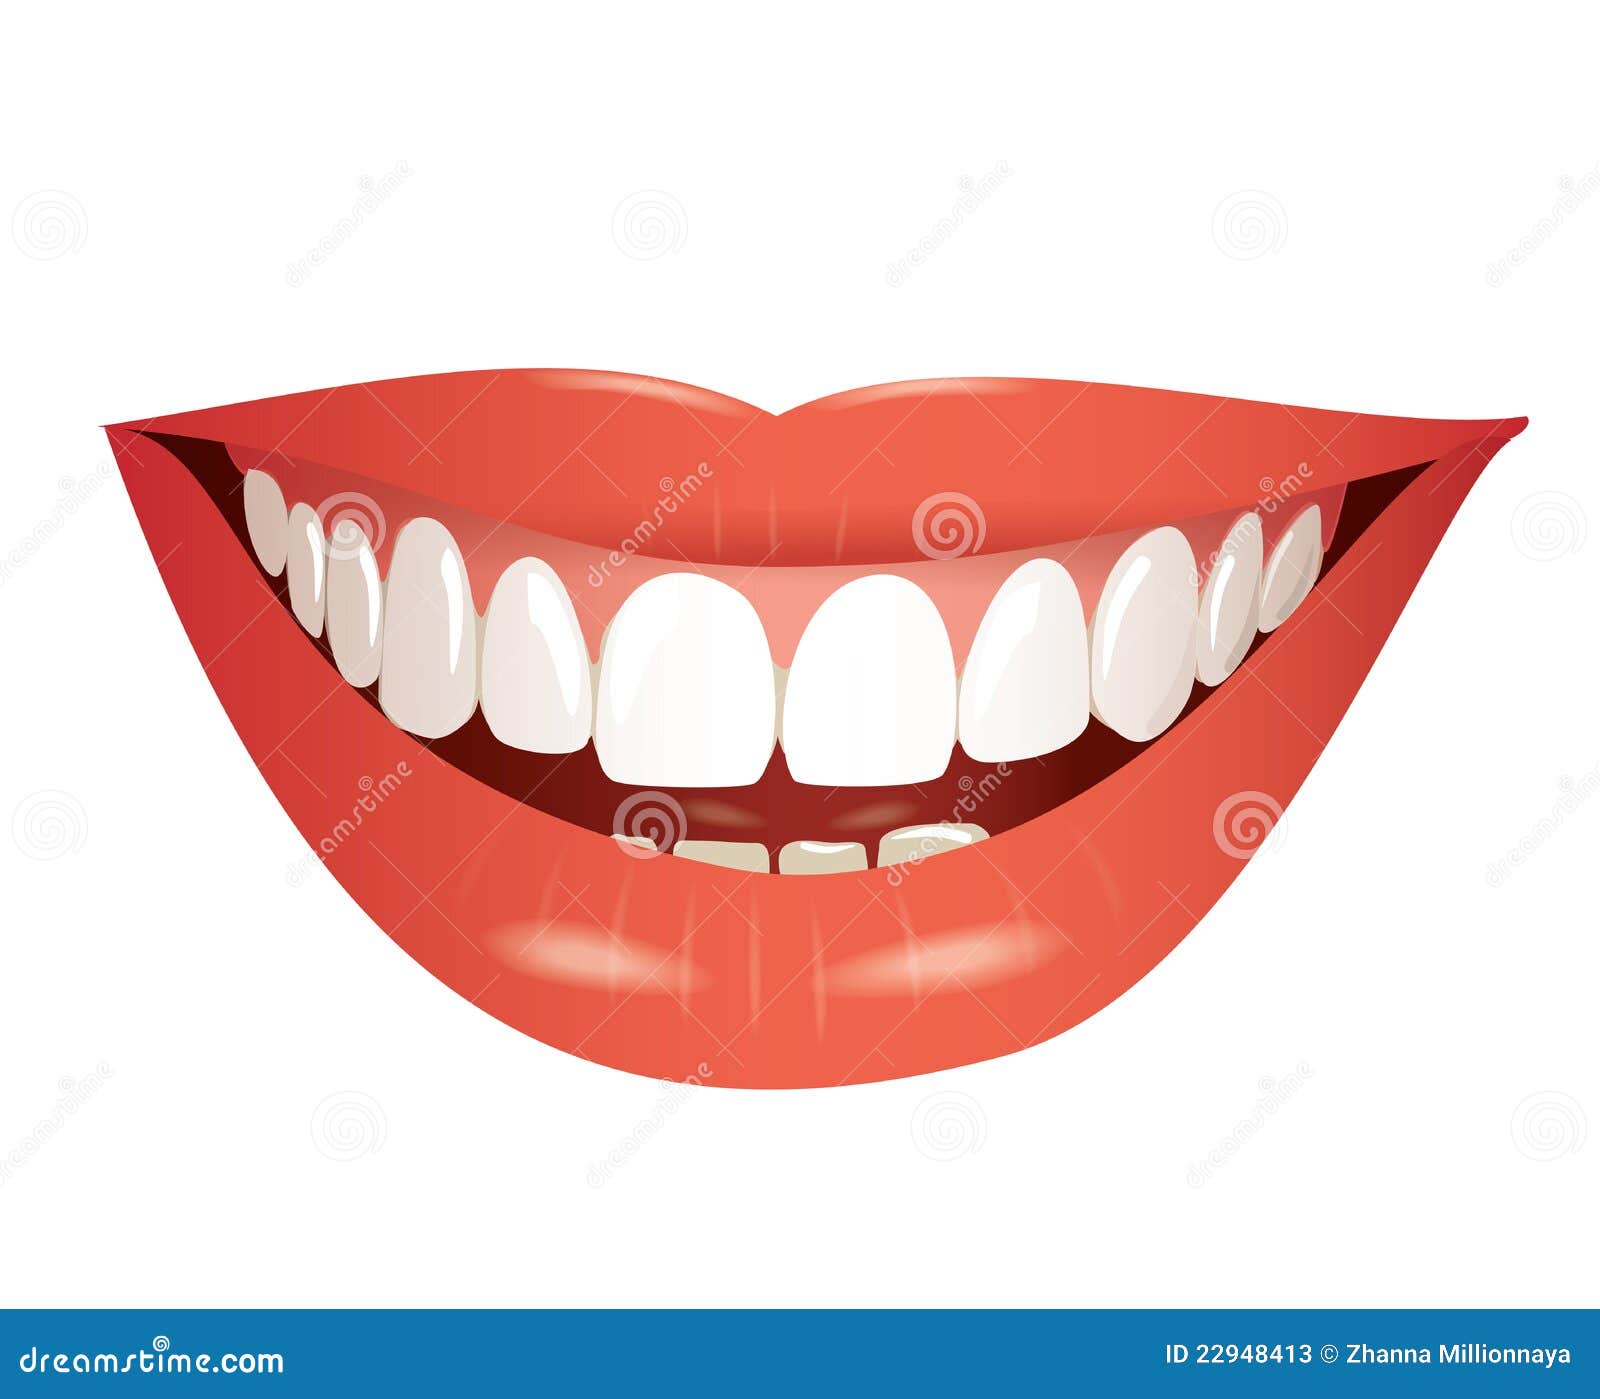 clipart smile teeth - photo #32